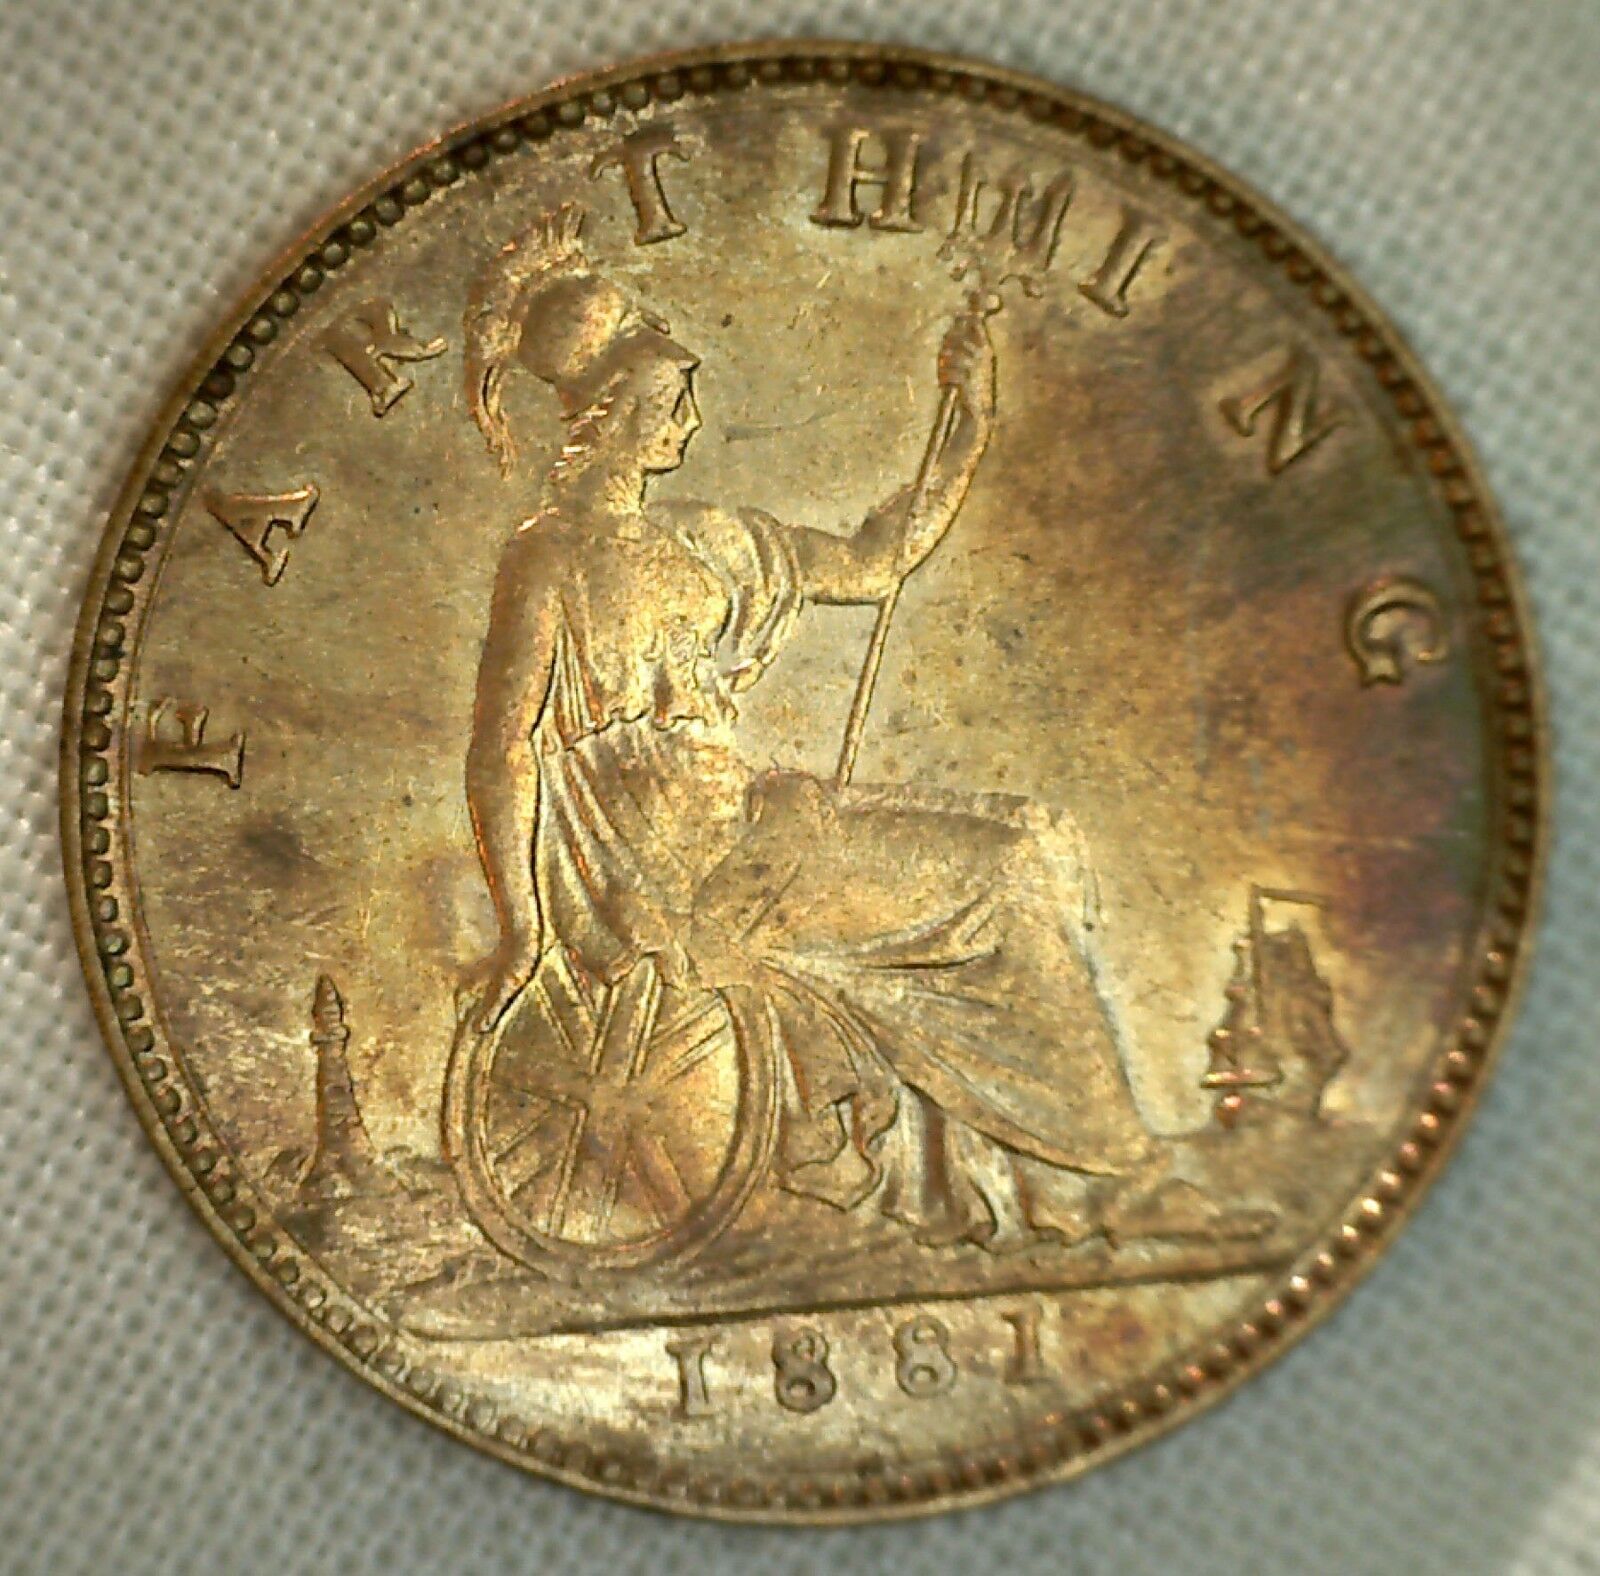 1881 Bronze Farthing 3 berries Great Britain UK Coin UNC